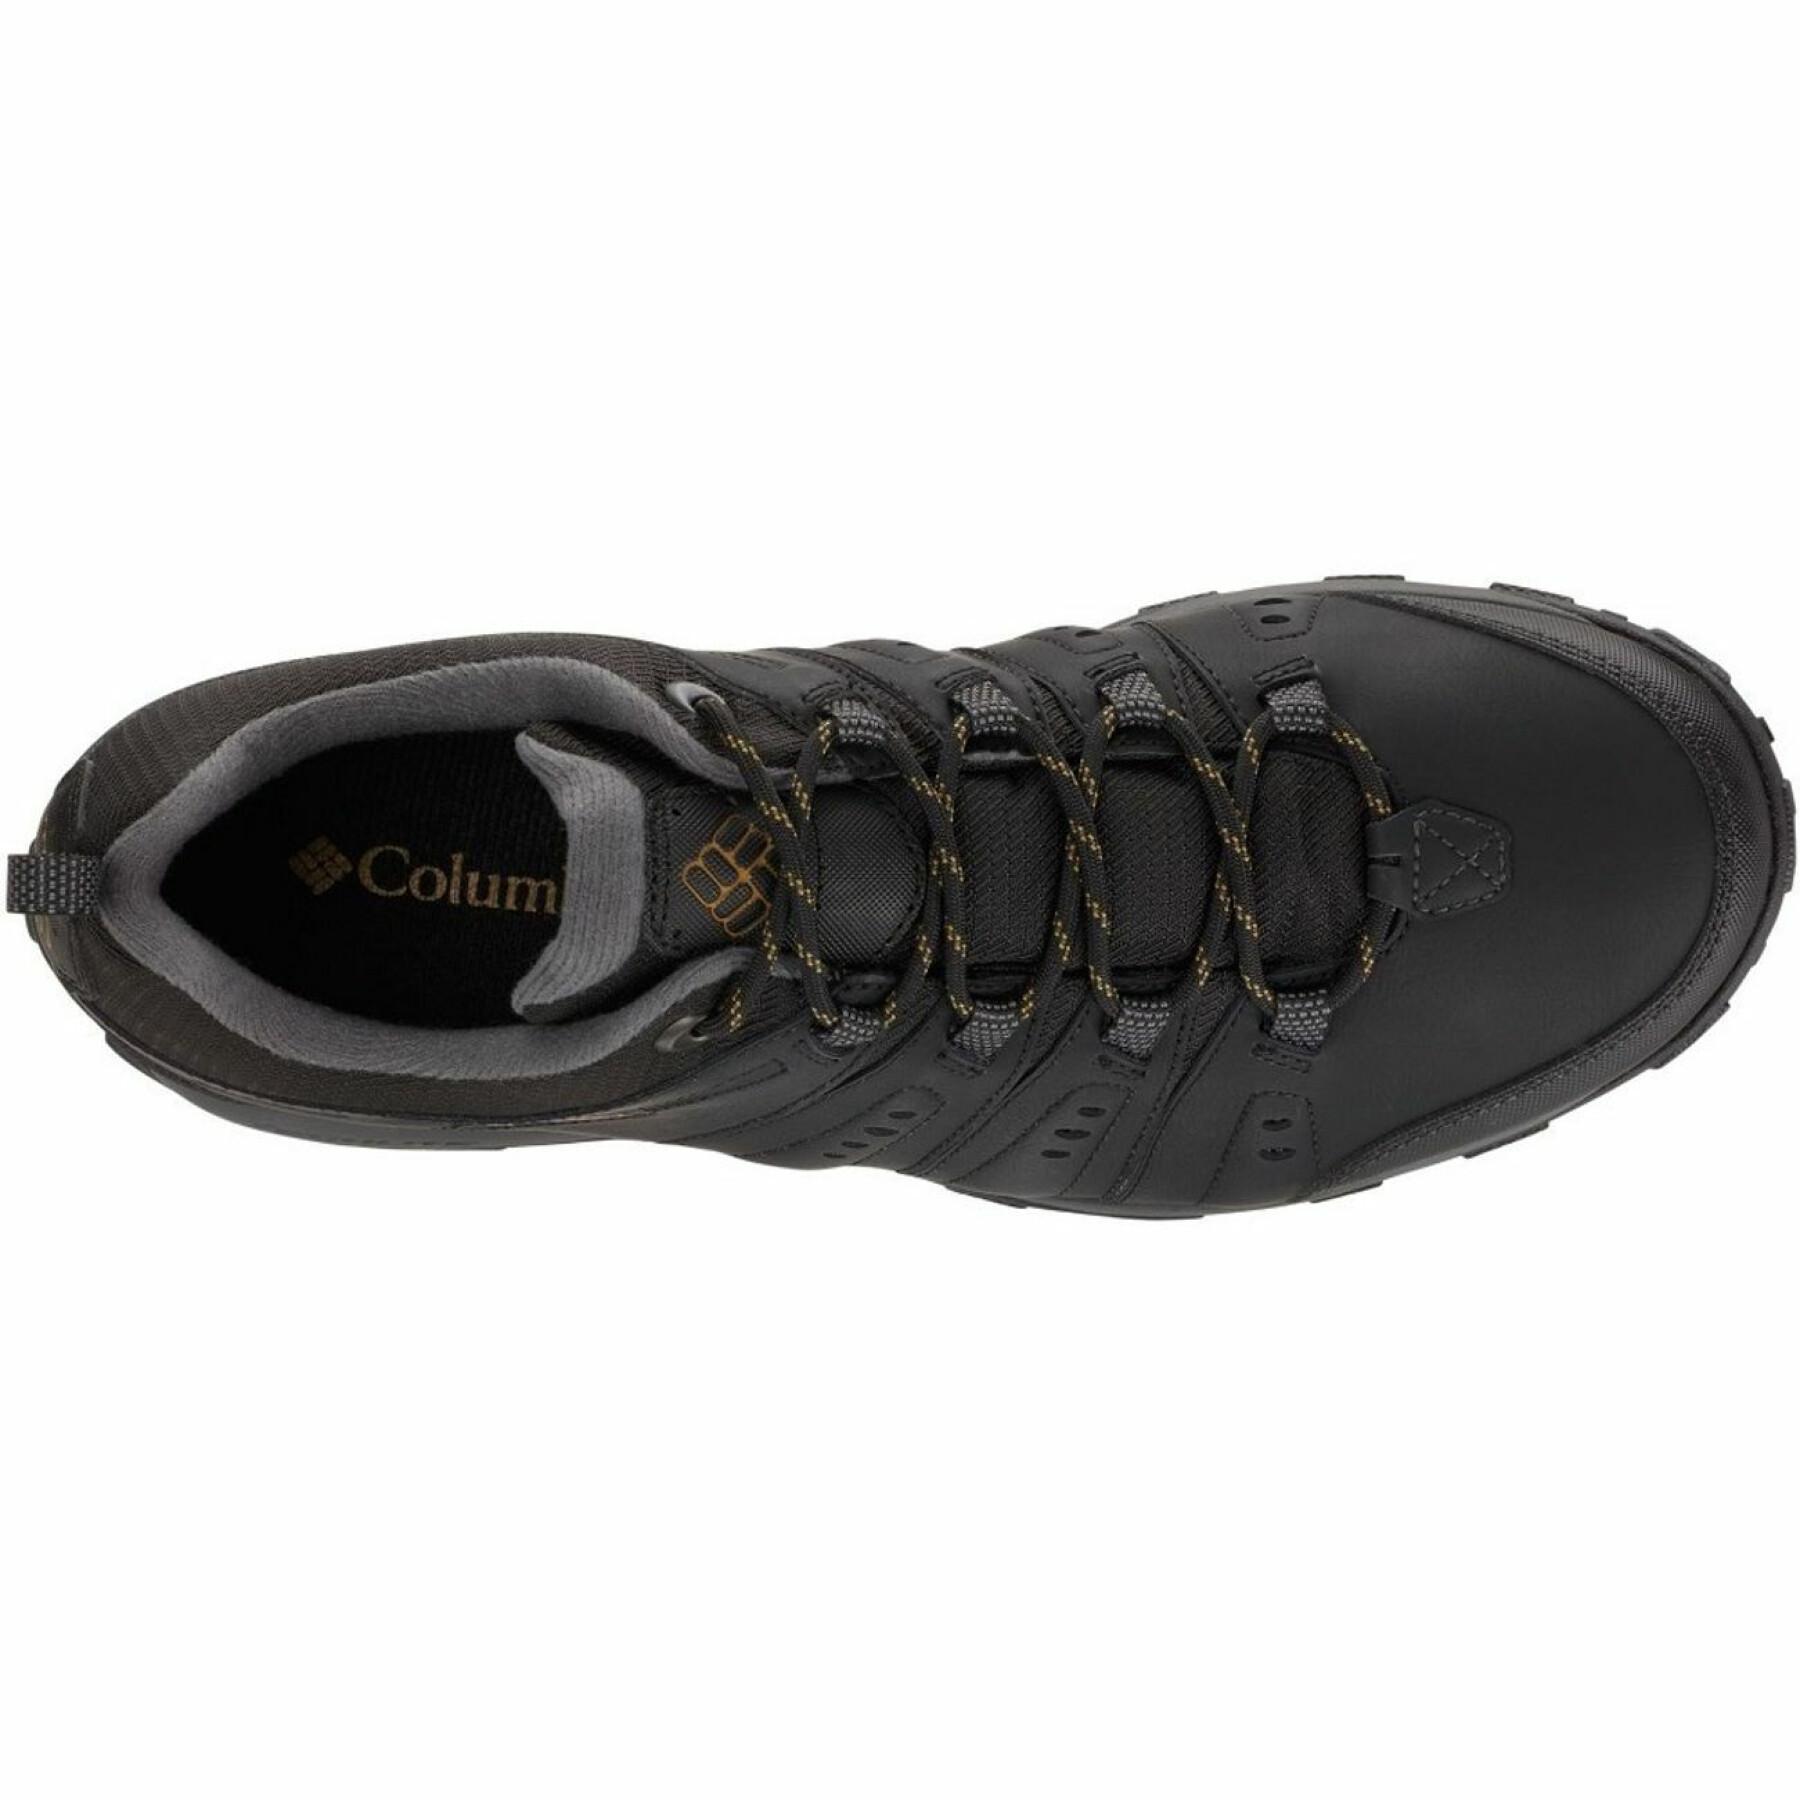 Walking shoes Columbia Woodburn II waterproof